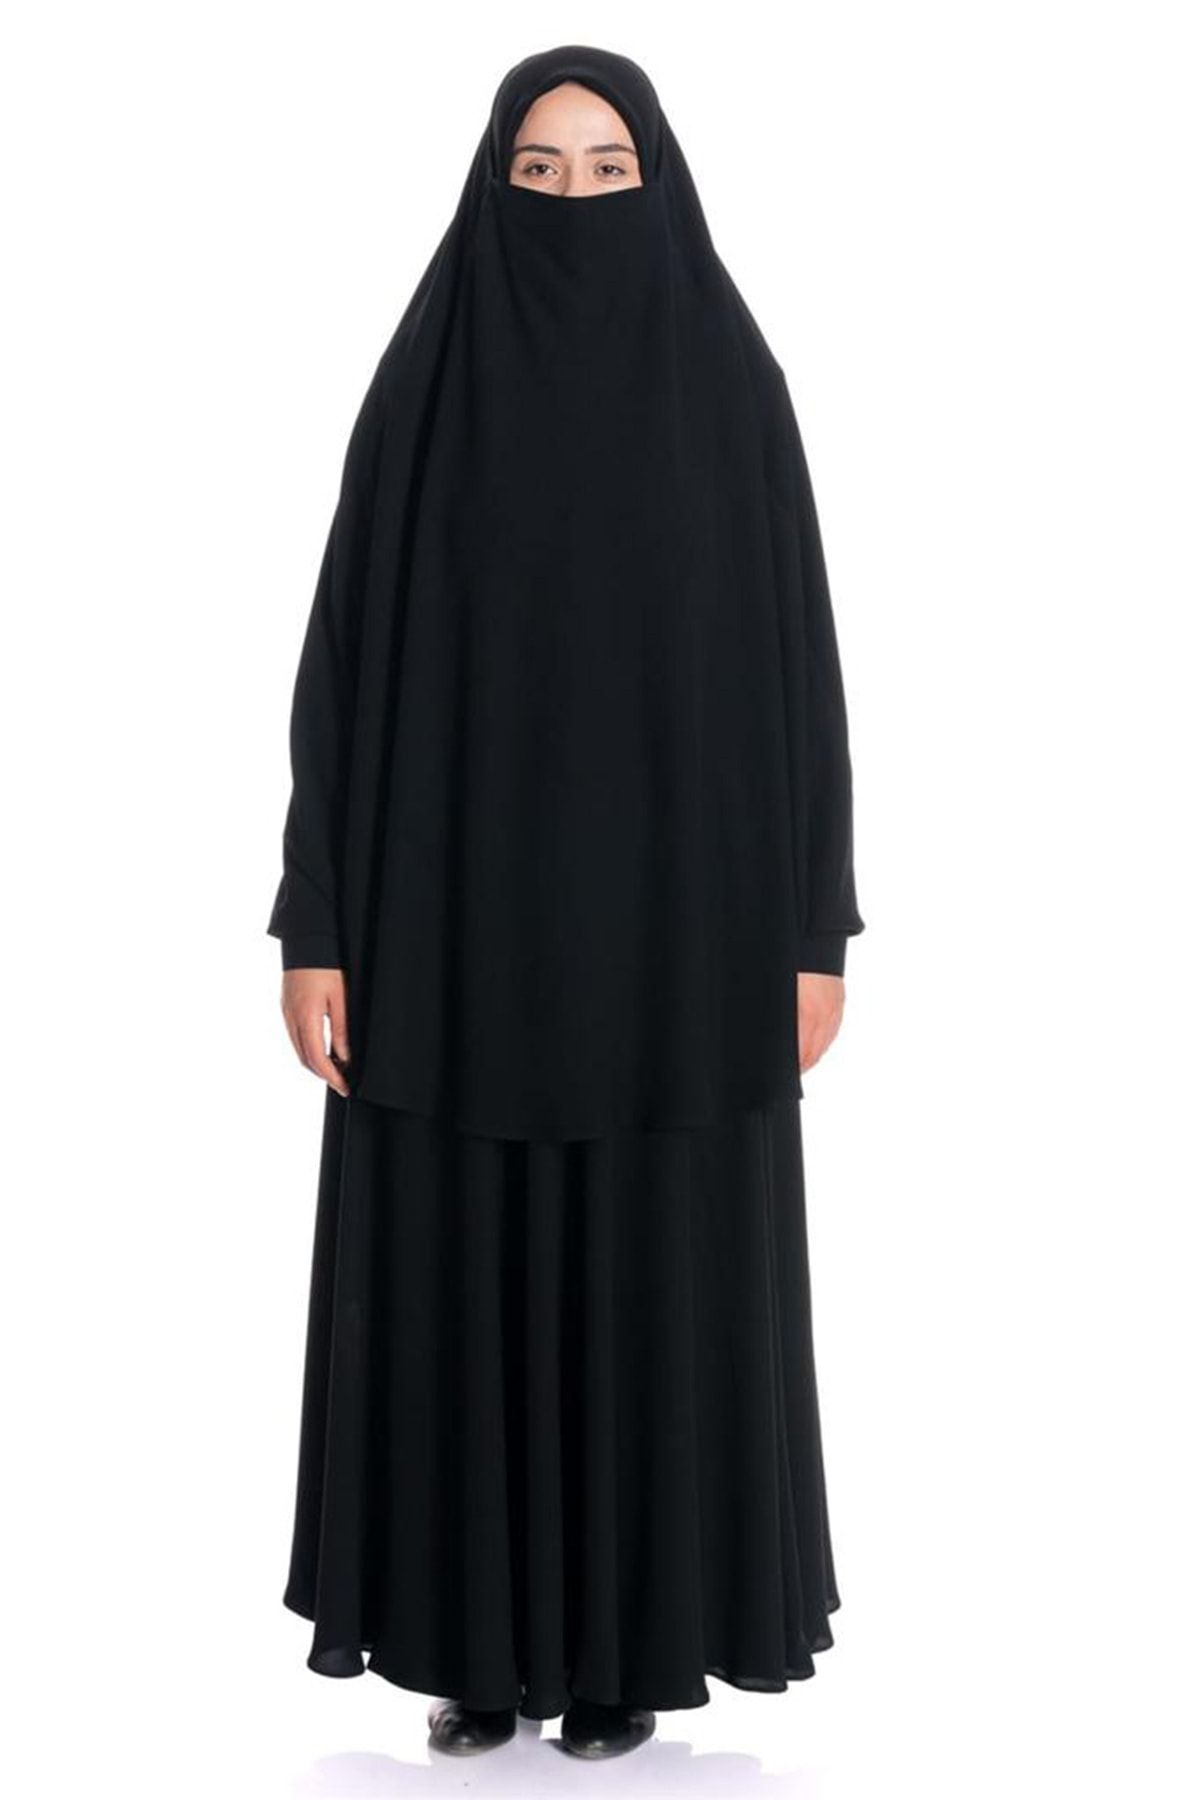 SÜVEYDA BY YÜCEL Krep Sultanbaş Model Tesettür Çarşaf Hijab